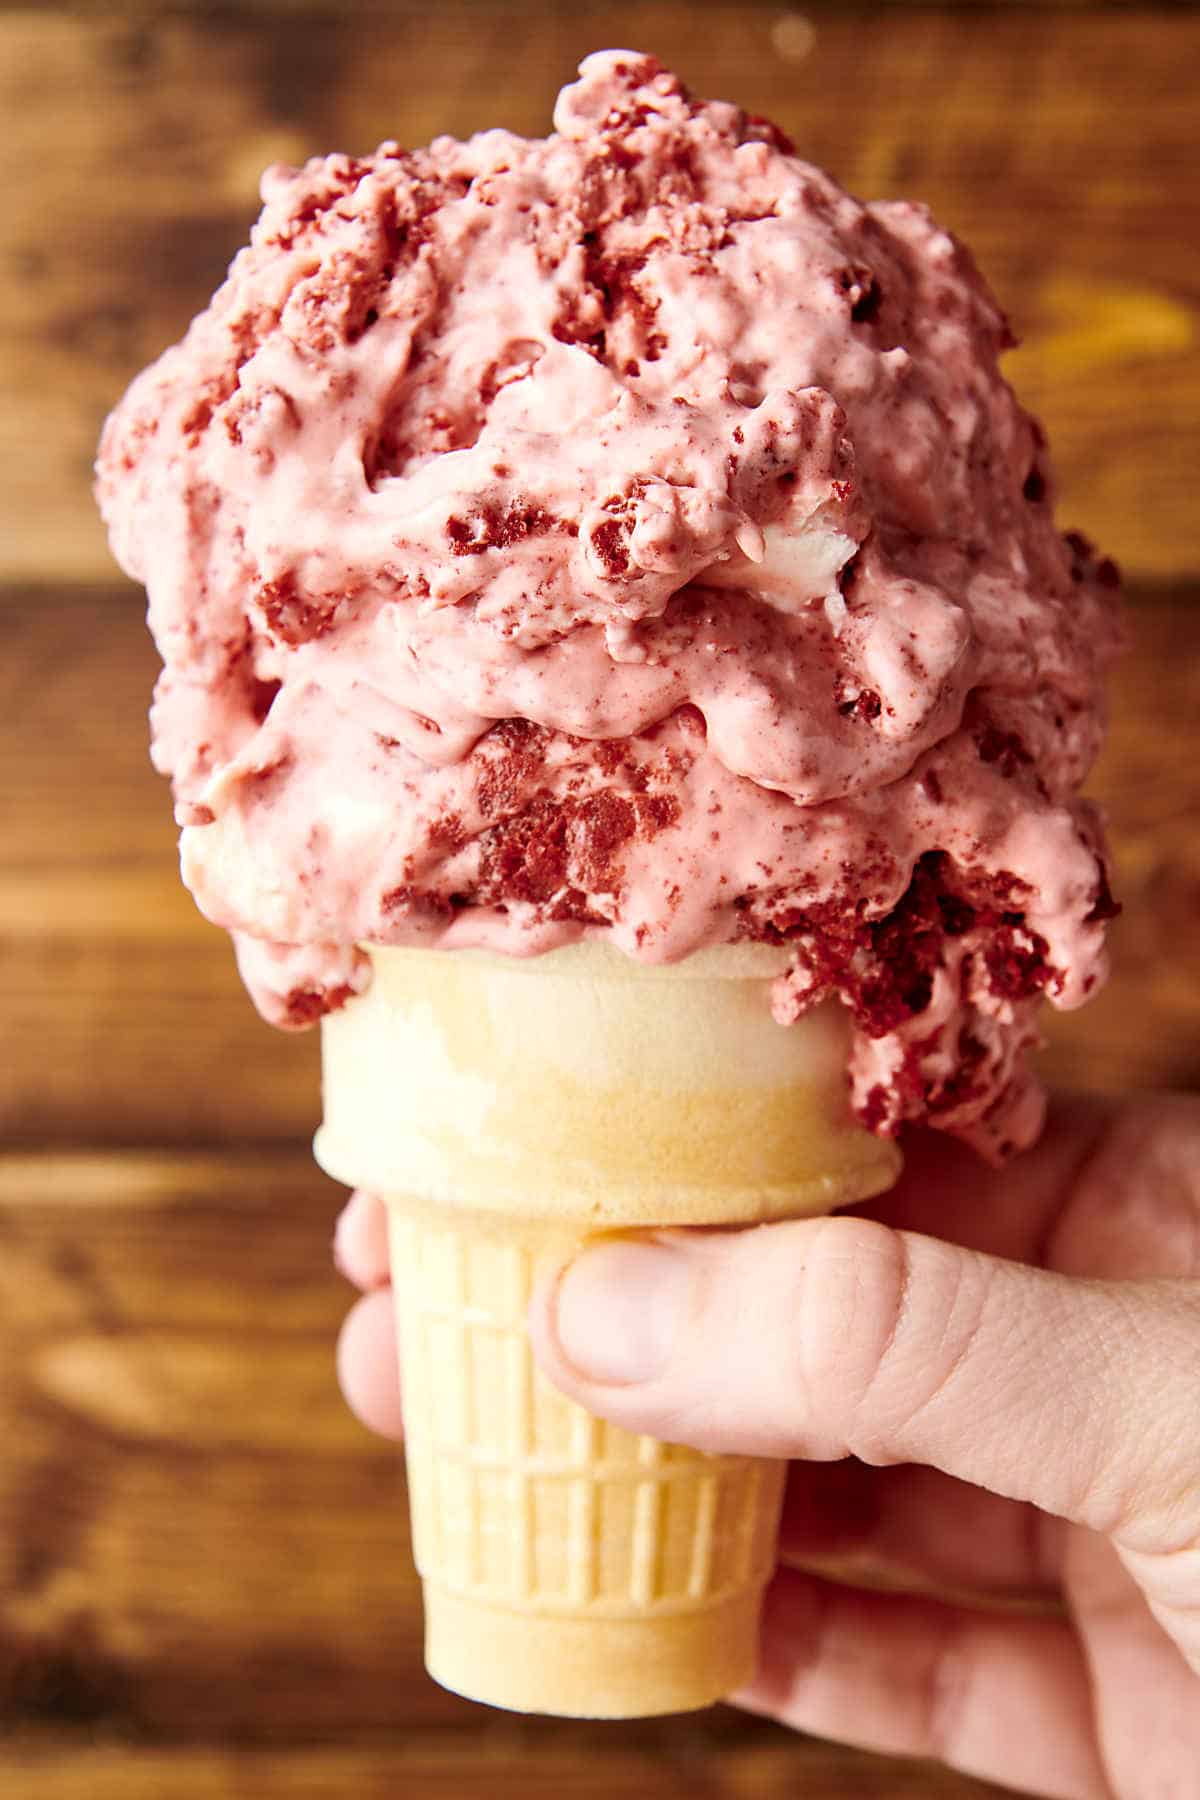 Red Velvet Ice Cream Cake (with No-Churn Homemade Ice Cream)